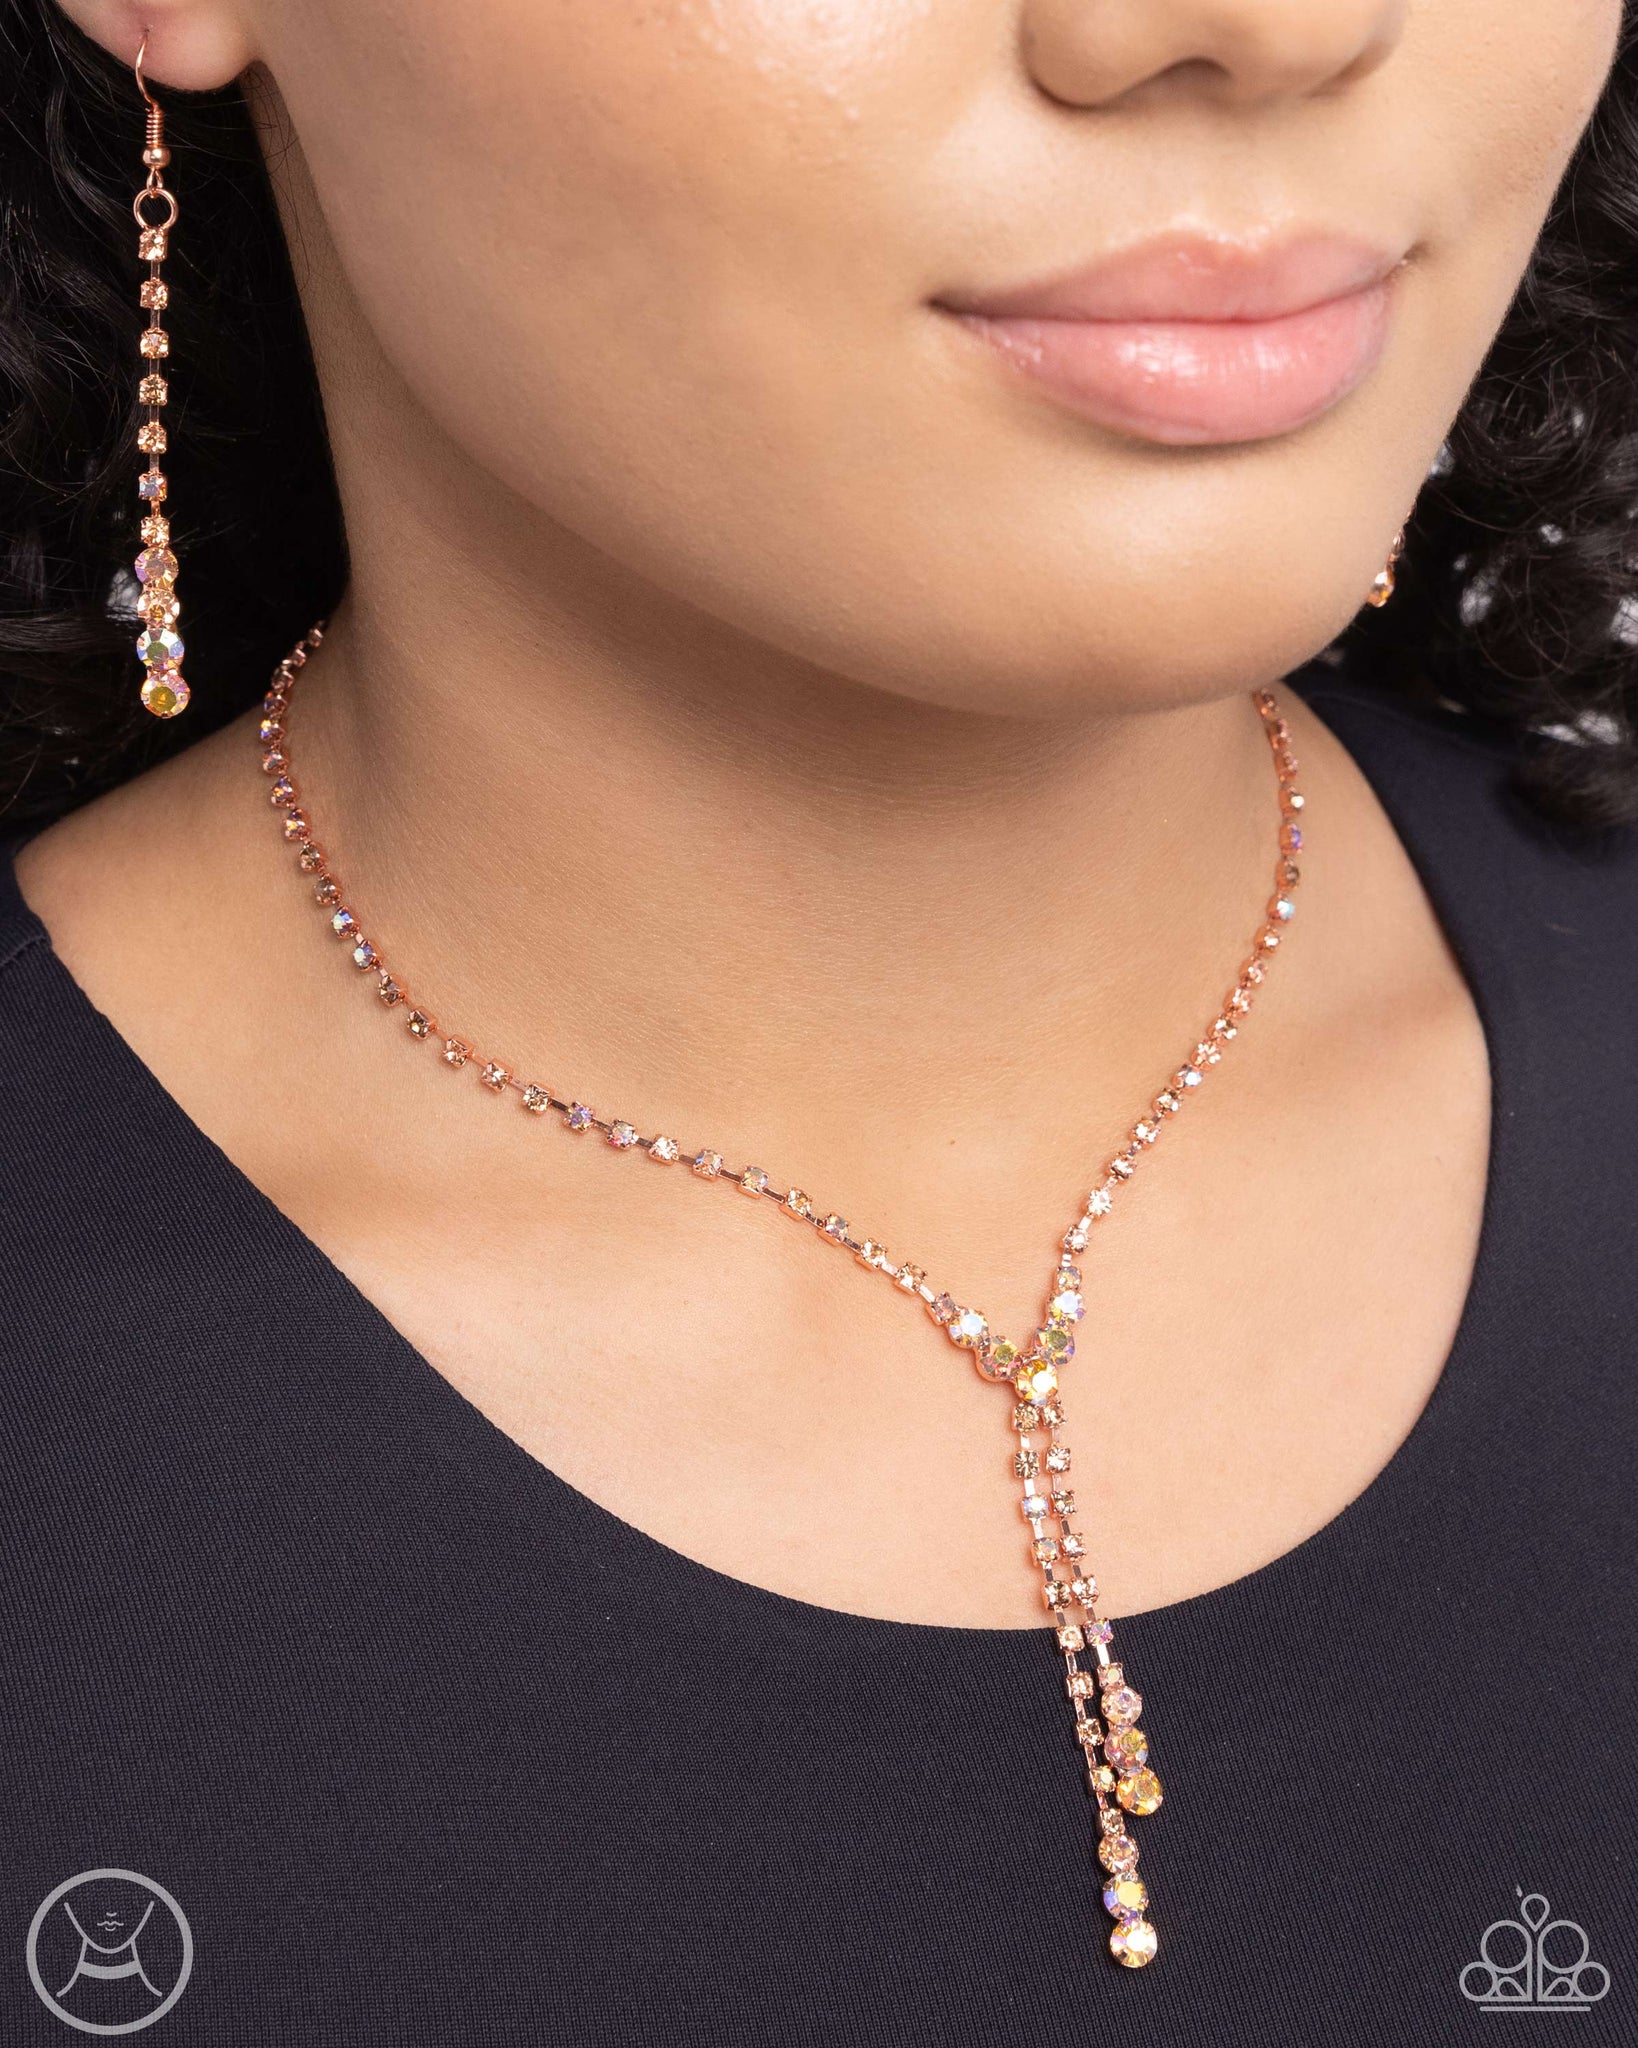 Blinding Balance Necklace (Black, Copper)